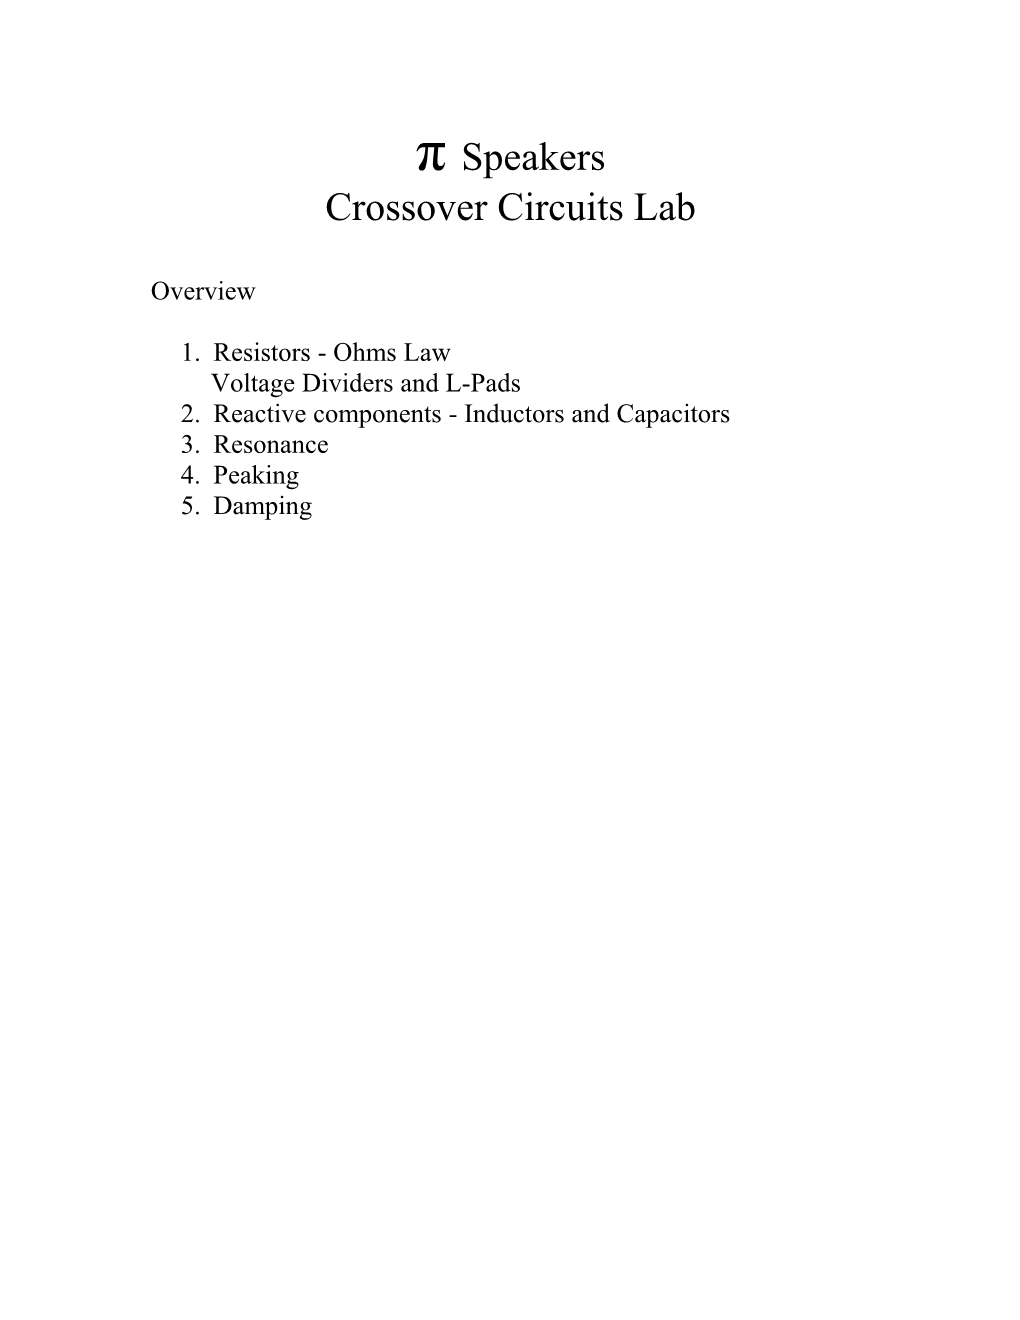 Crossover Circuits Lab